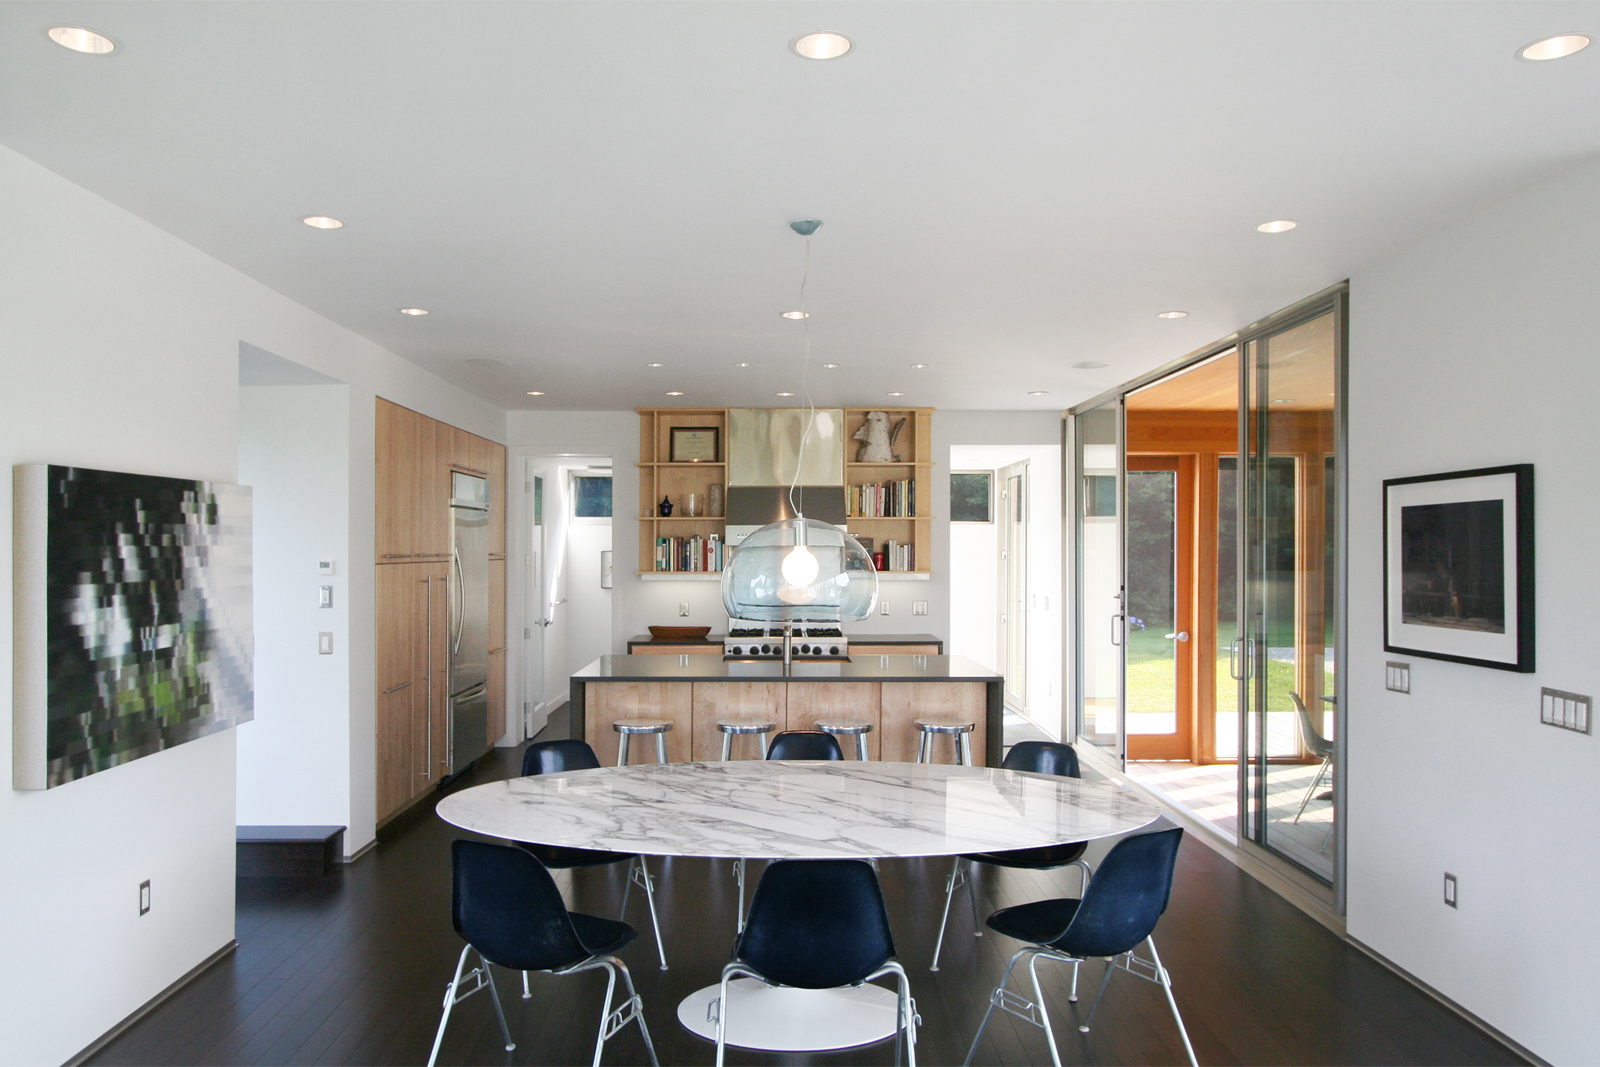 07-res4-resolution-4-architecture-modern-modular-home-prefab-sunset-ridge-house-interior-kitchen-dining.jpg